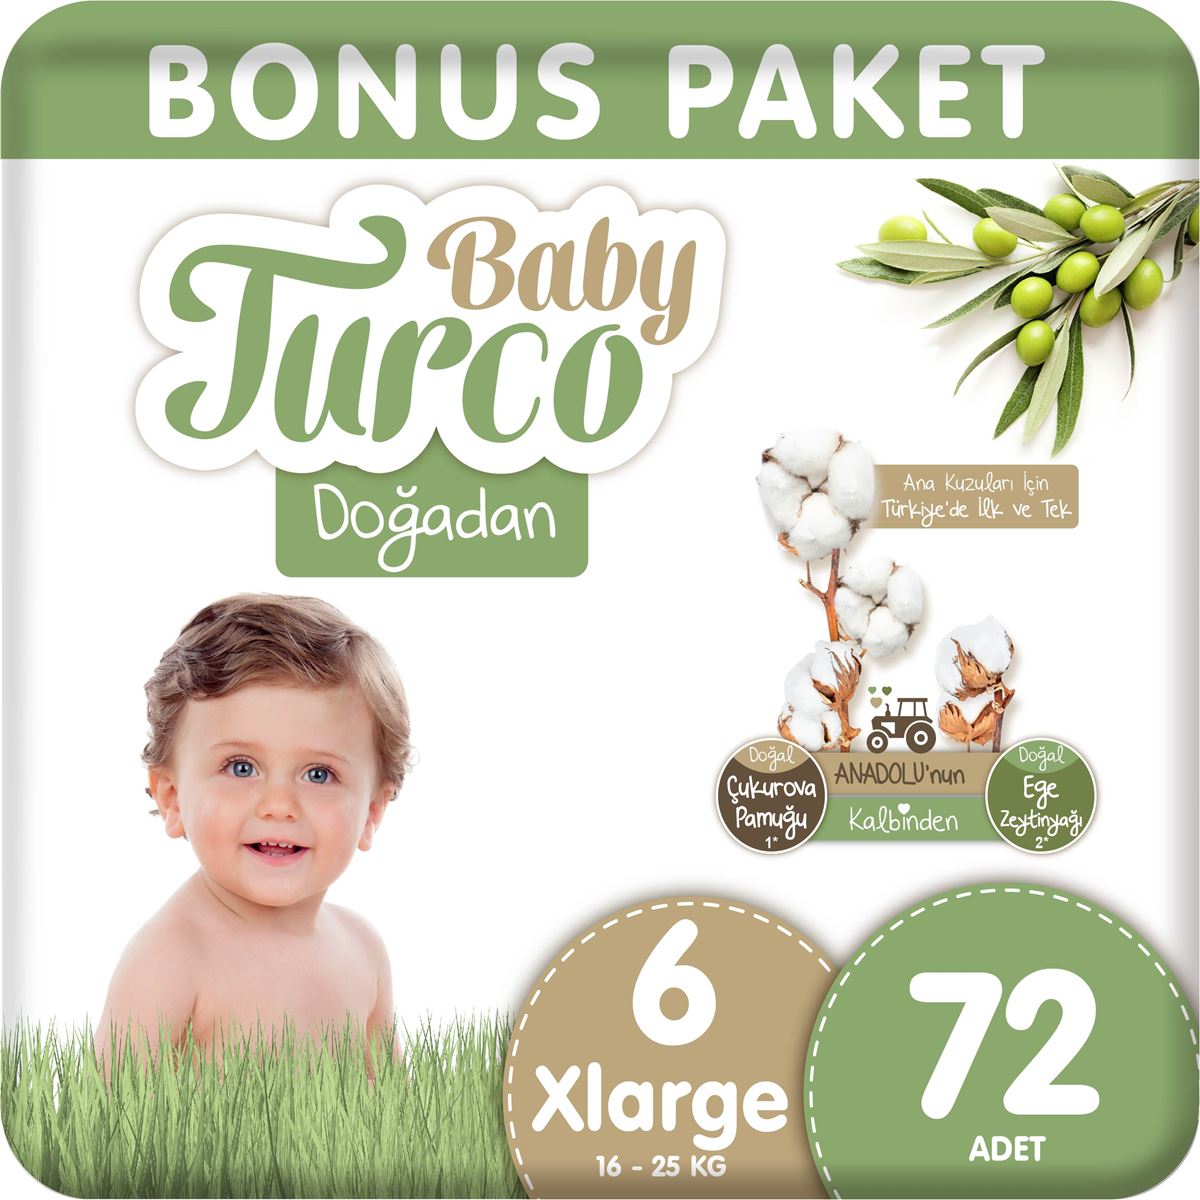 Baby Turco Doğadan Bebek Bezi 6 Numara Xlarge Bonus Paket 72 Adet